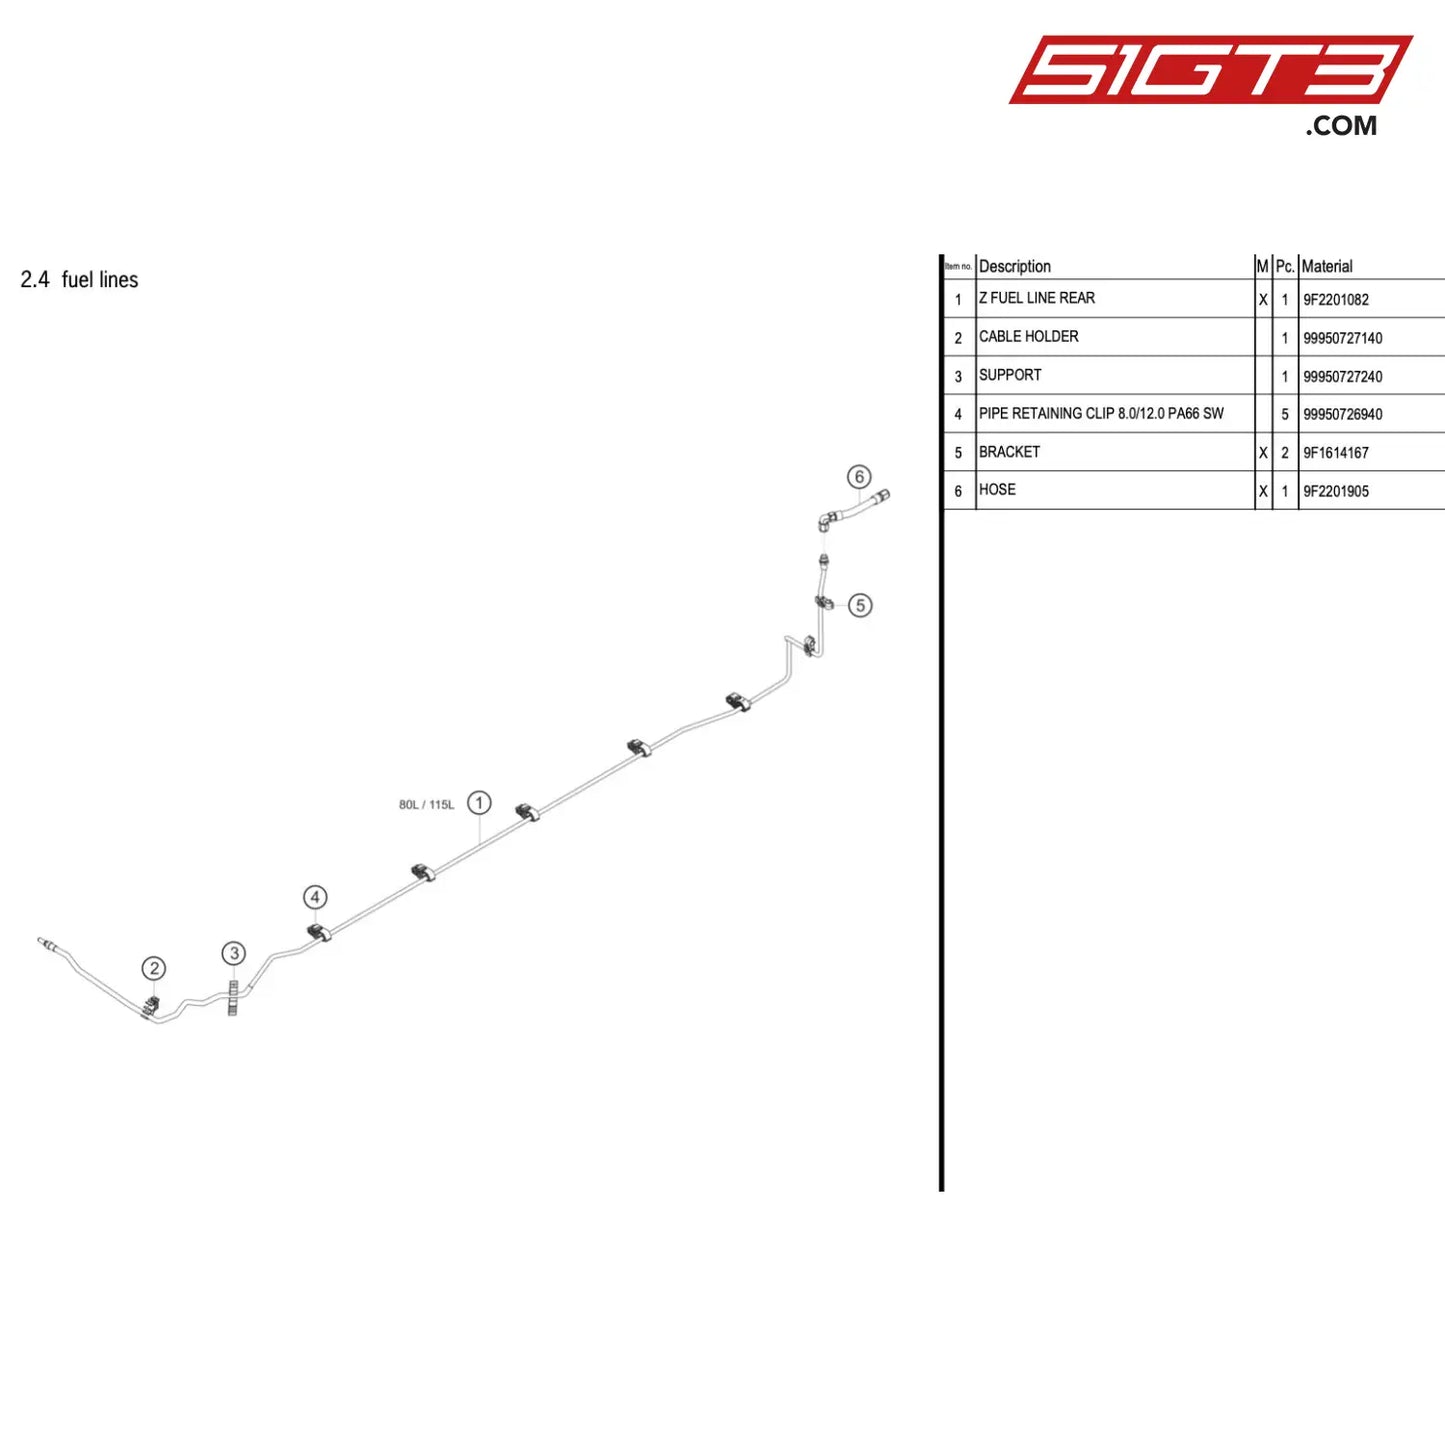 Z Fuel Line Rear - 9F2201082 [Porsche 718 Cayman Gt4 Rs Clubsport] Fuel Lines